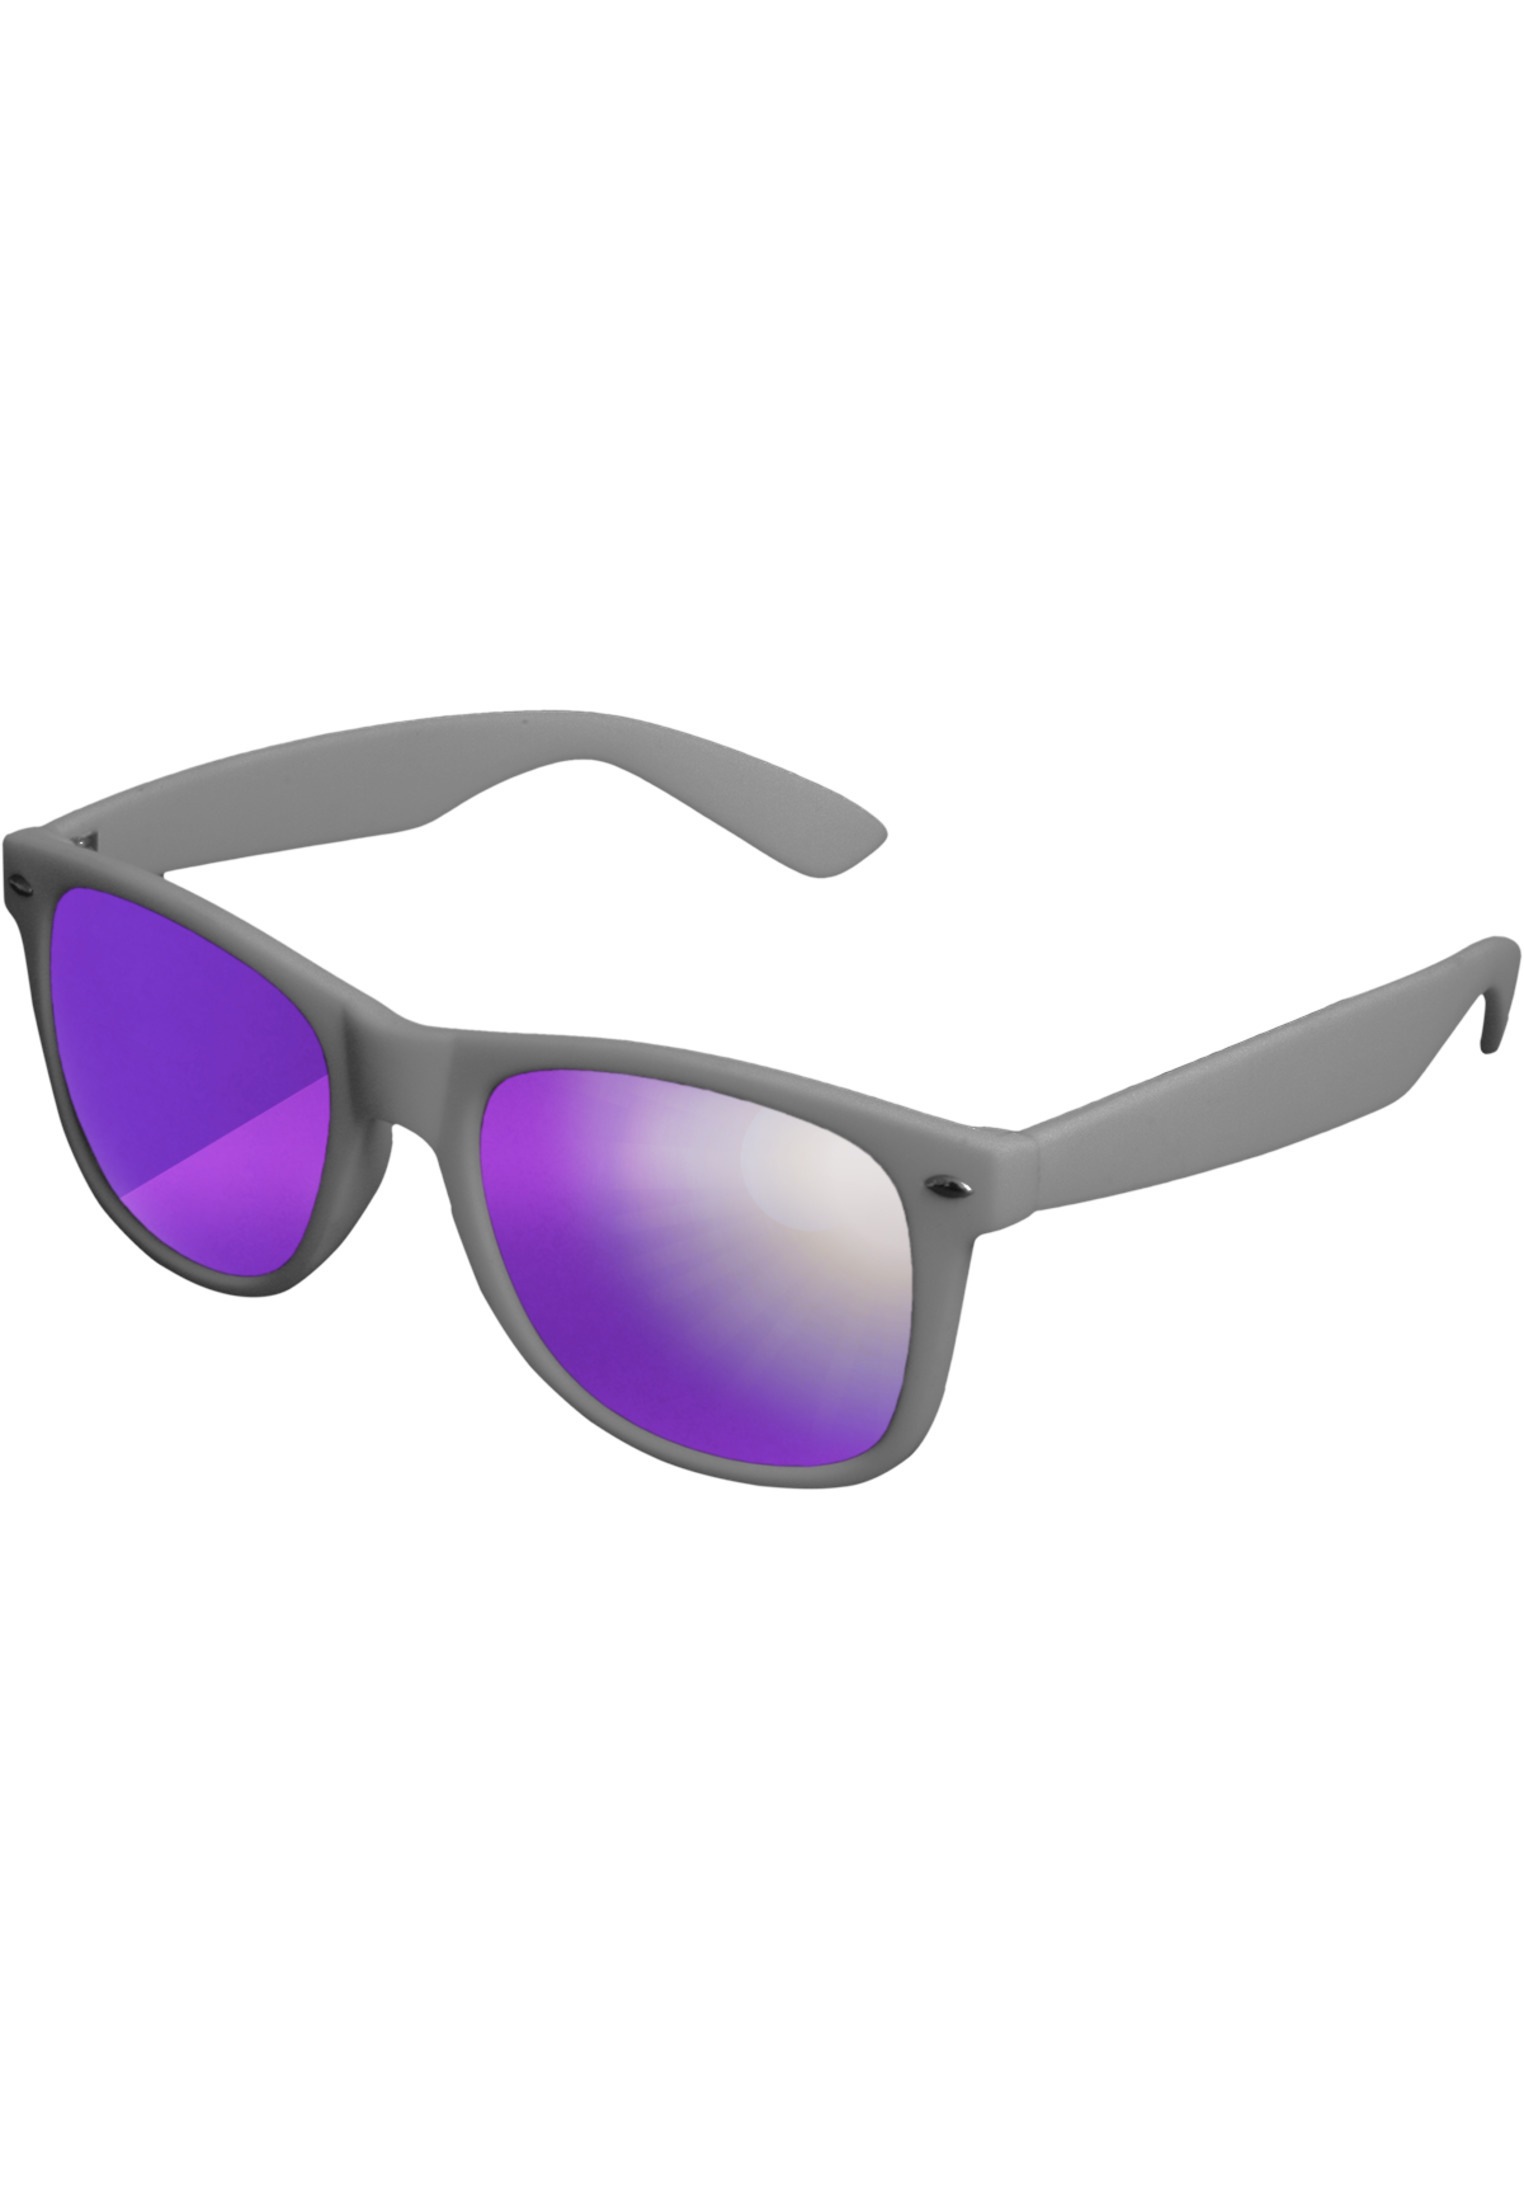 MSTRDS Sonnenbrille »Accessoires online bestellen BAUR | Likoma Sunglasses Mirror«